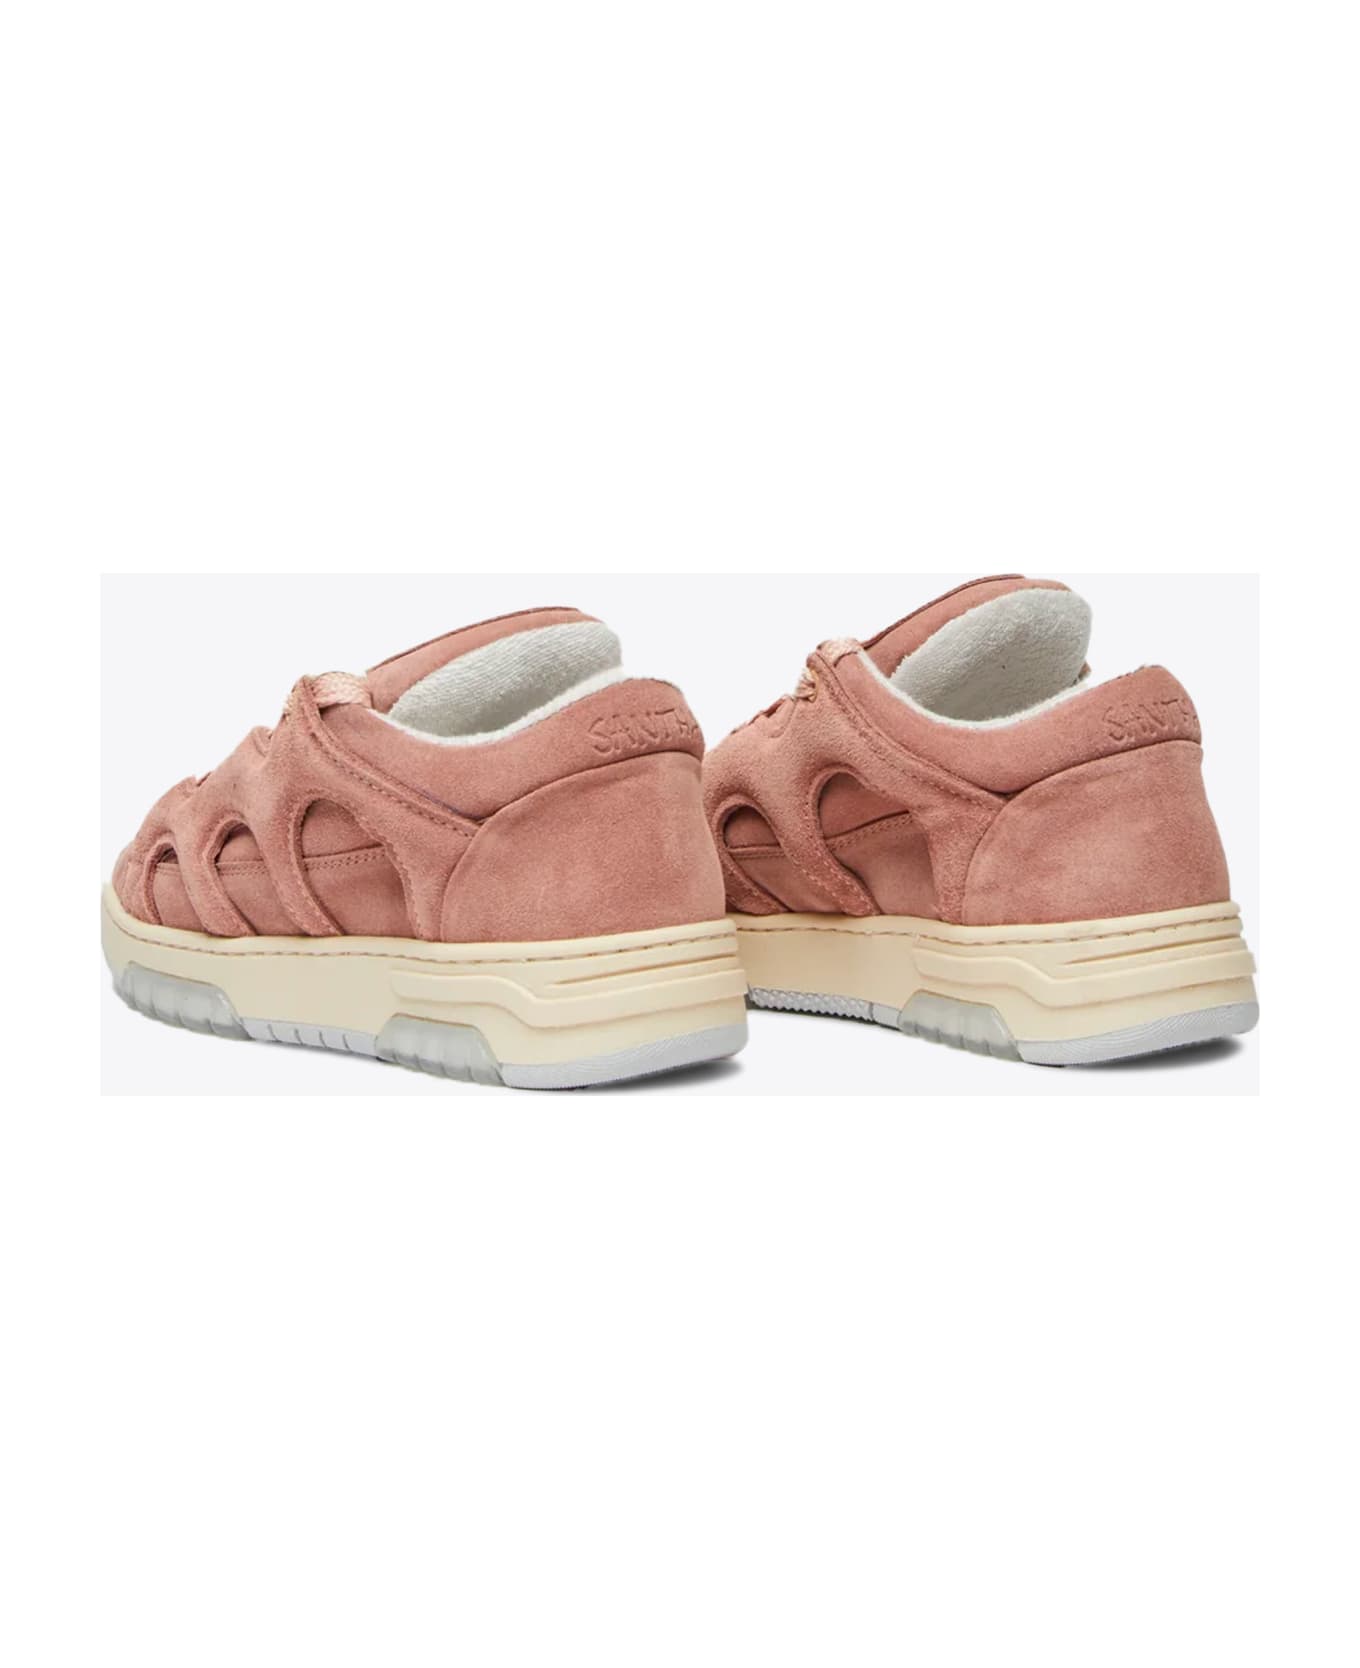 Paura Santha 1 Suede Antique pink suede low sneaker - Rosa antico スニーカー